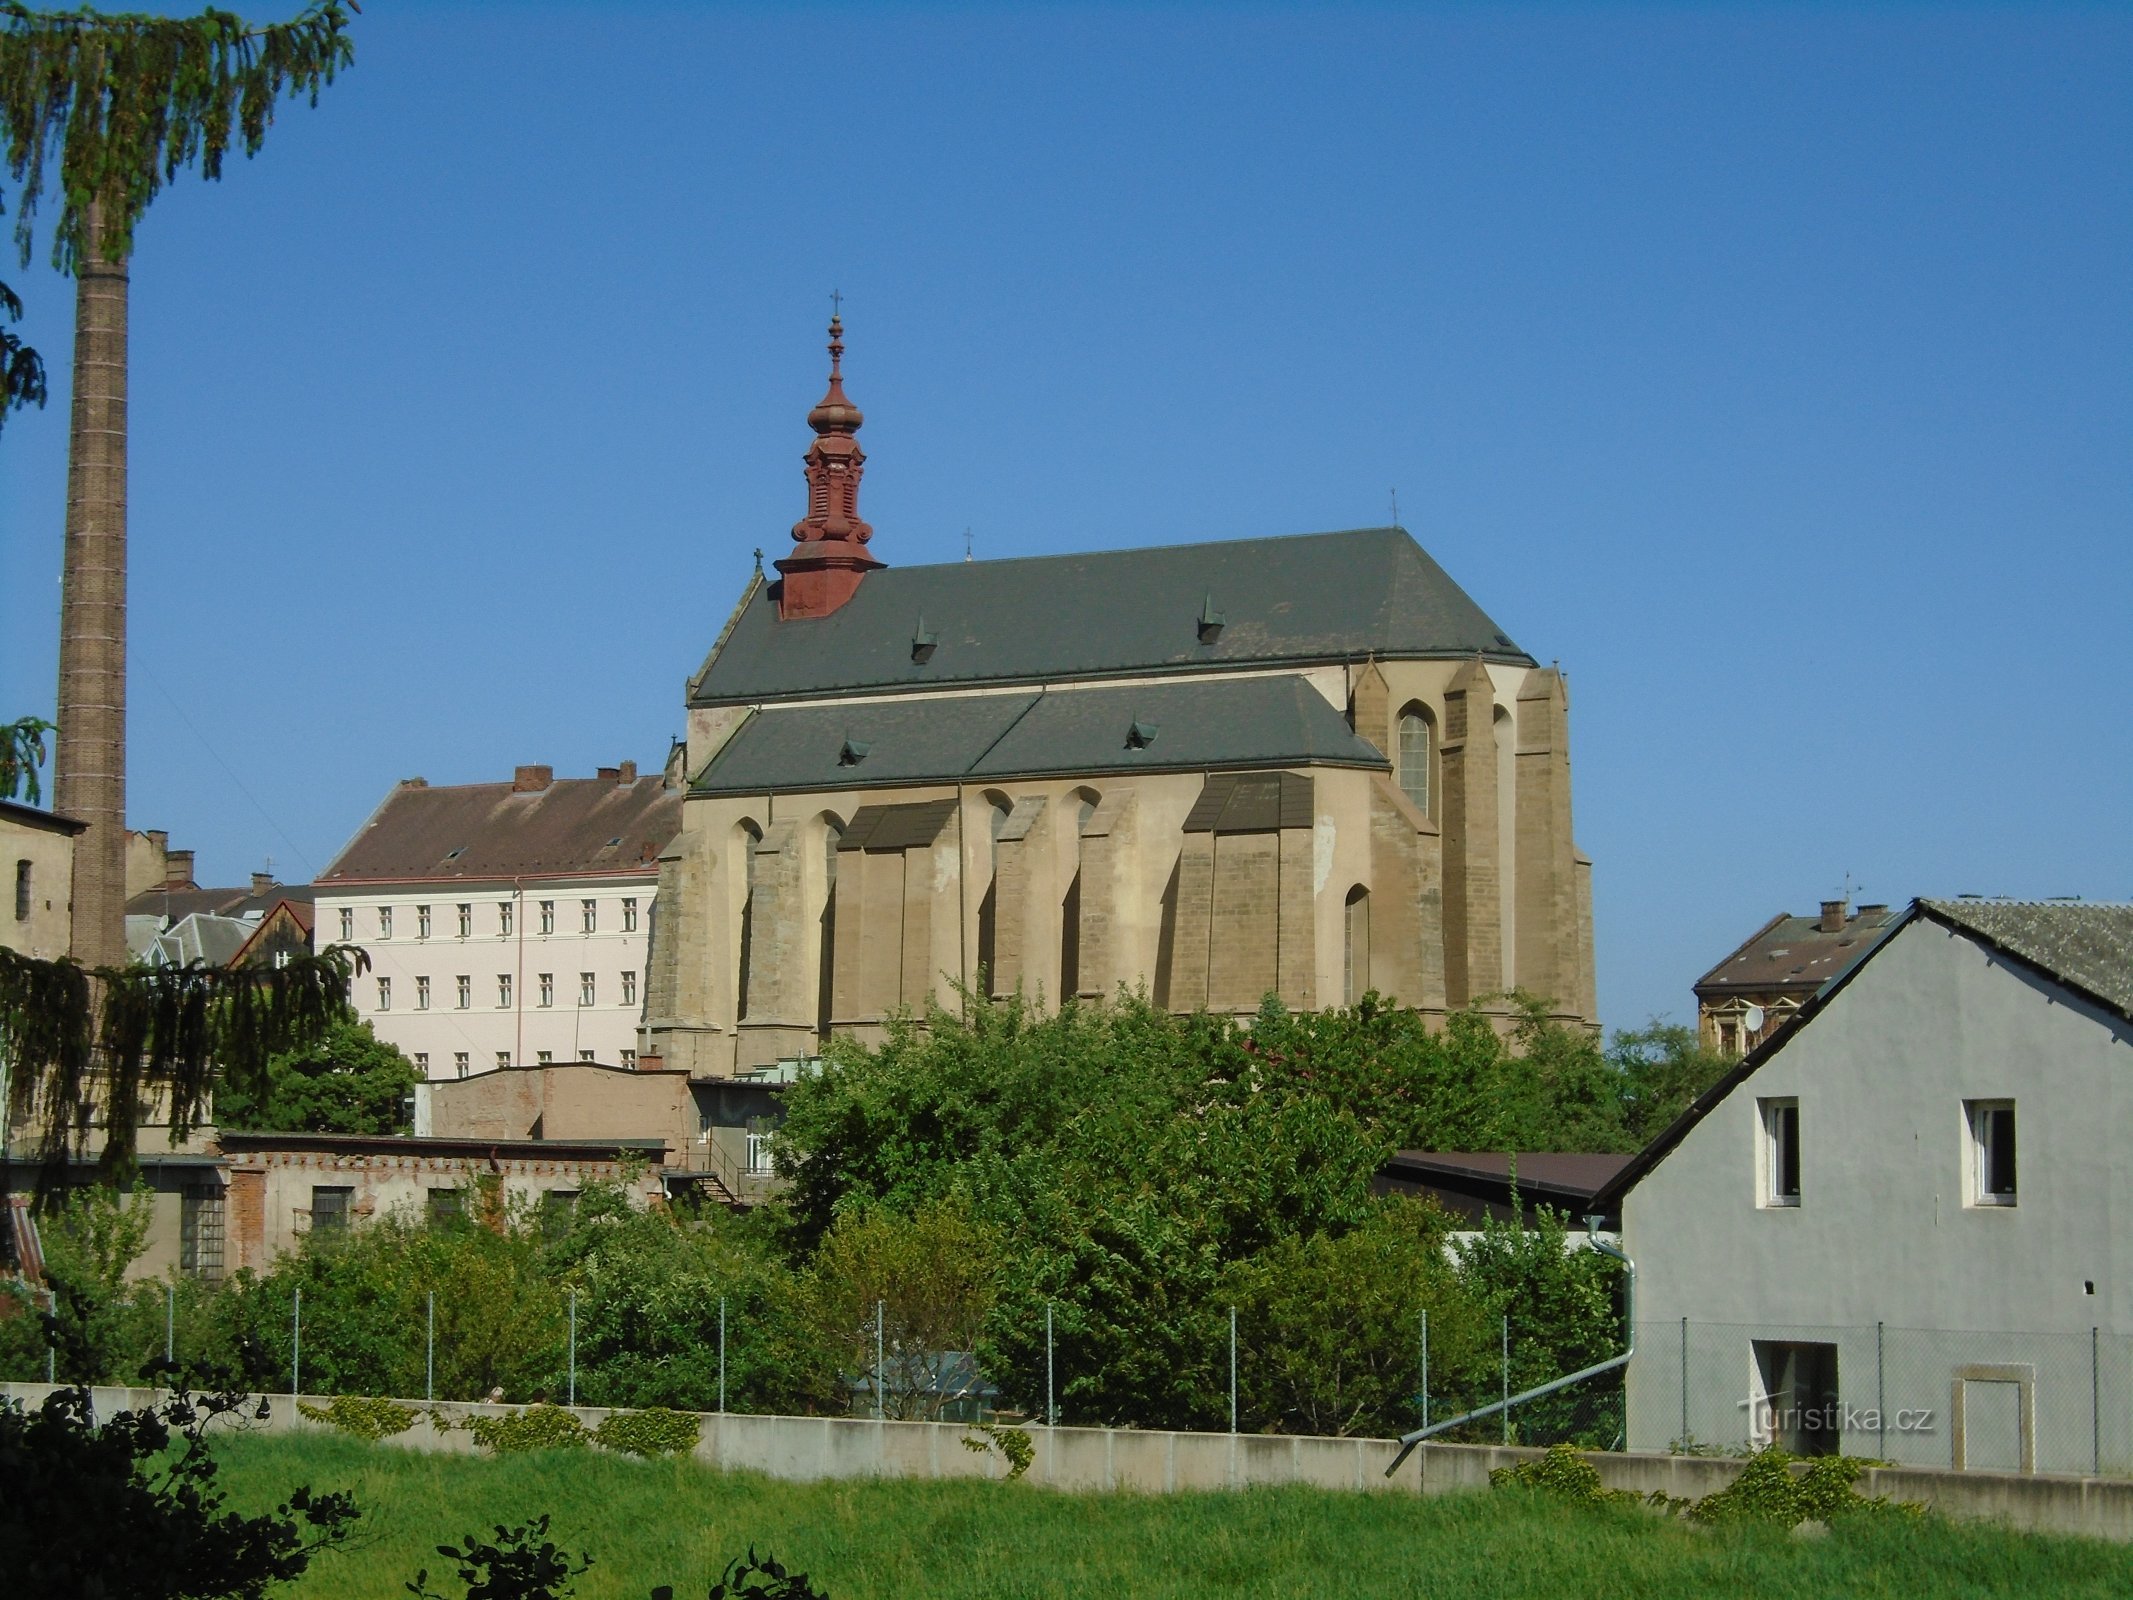 Church of St. Nicholas (Jaroměř, 13.5.2018 May XNUMX)